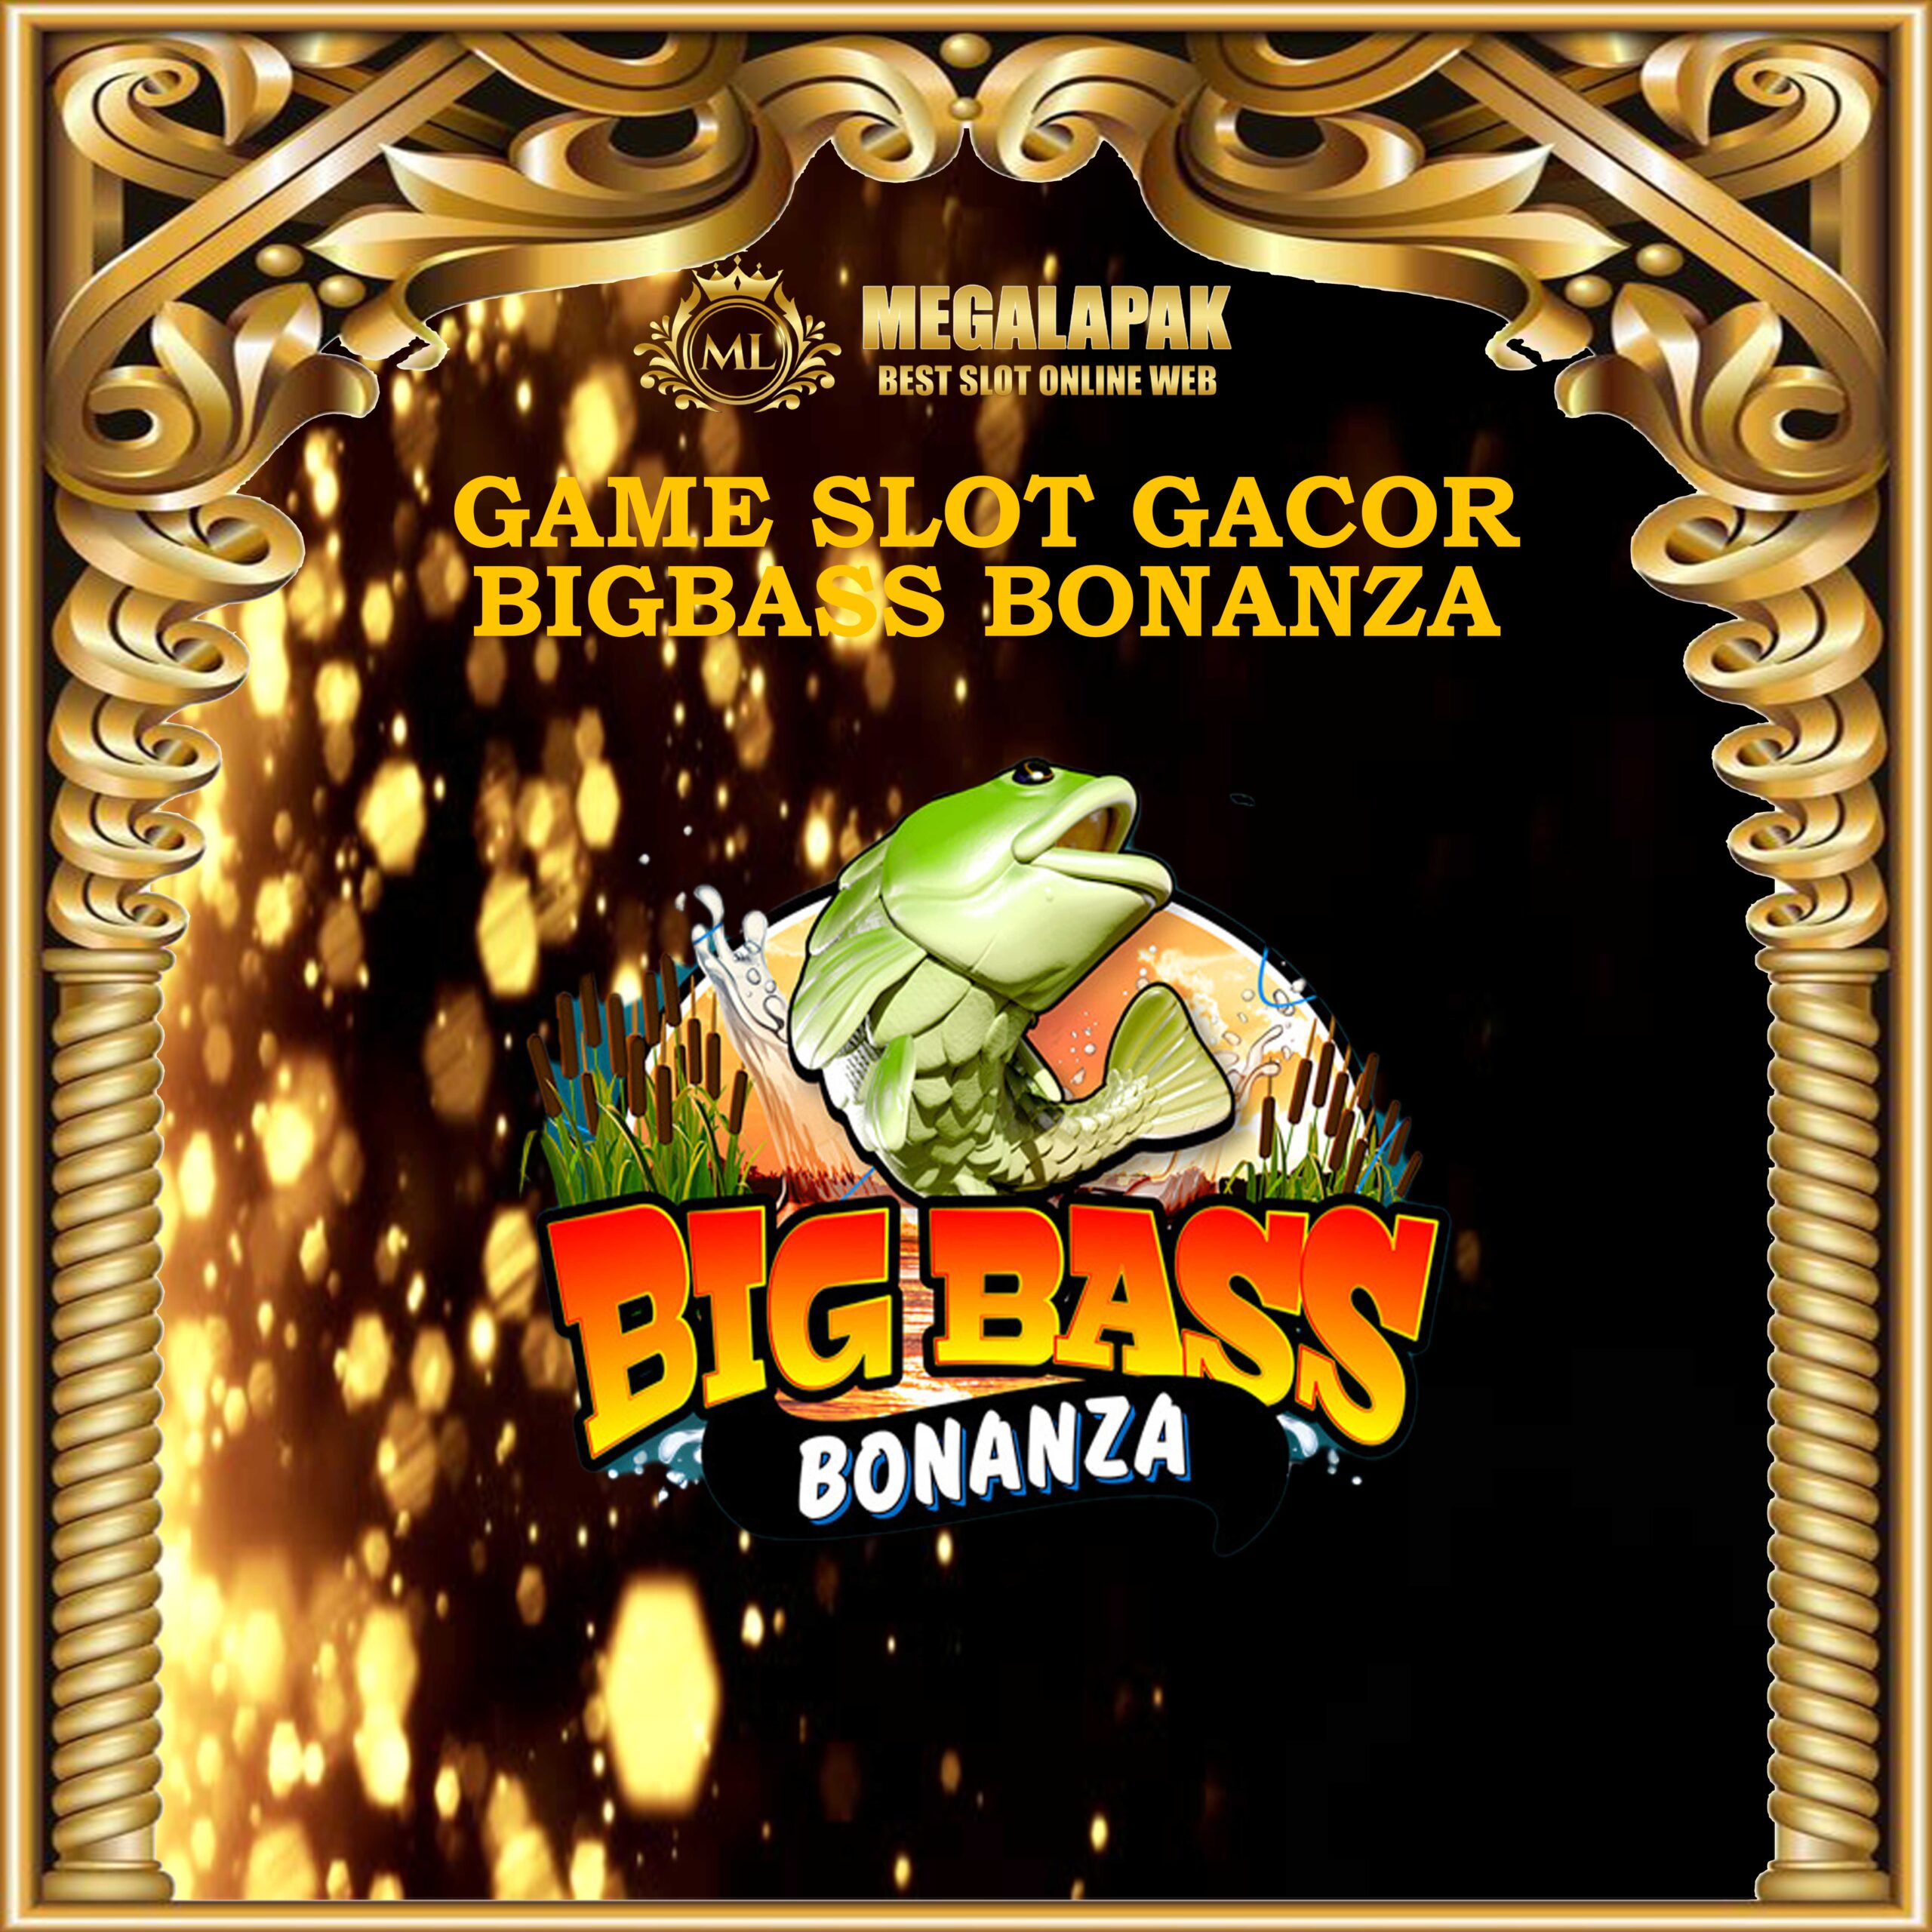 Slot Gacor BigBass Bonanza Megalapak